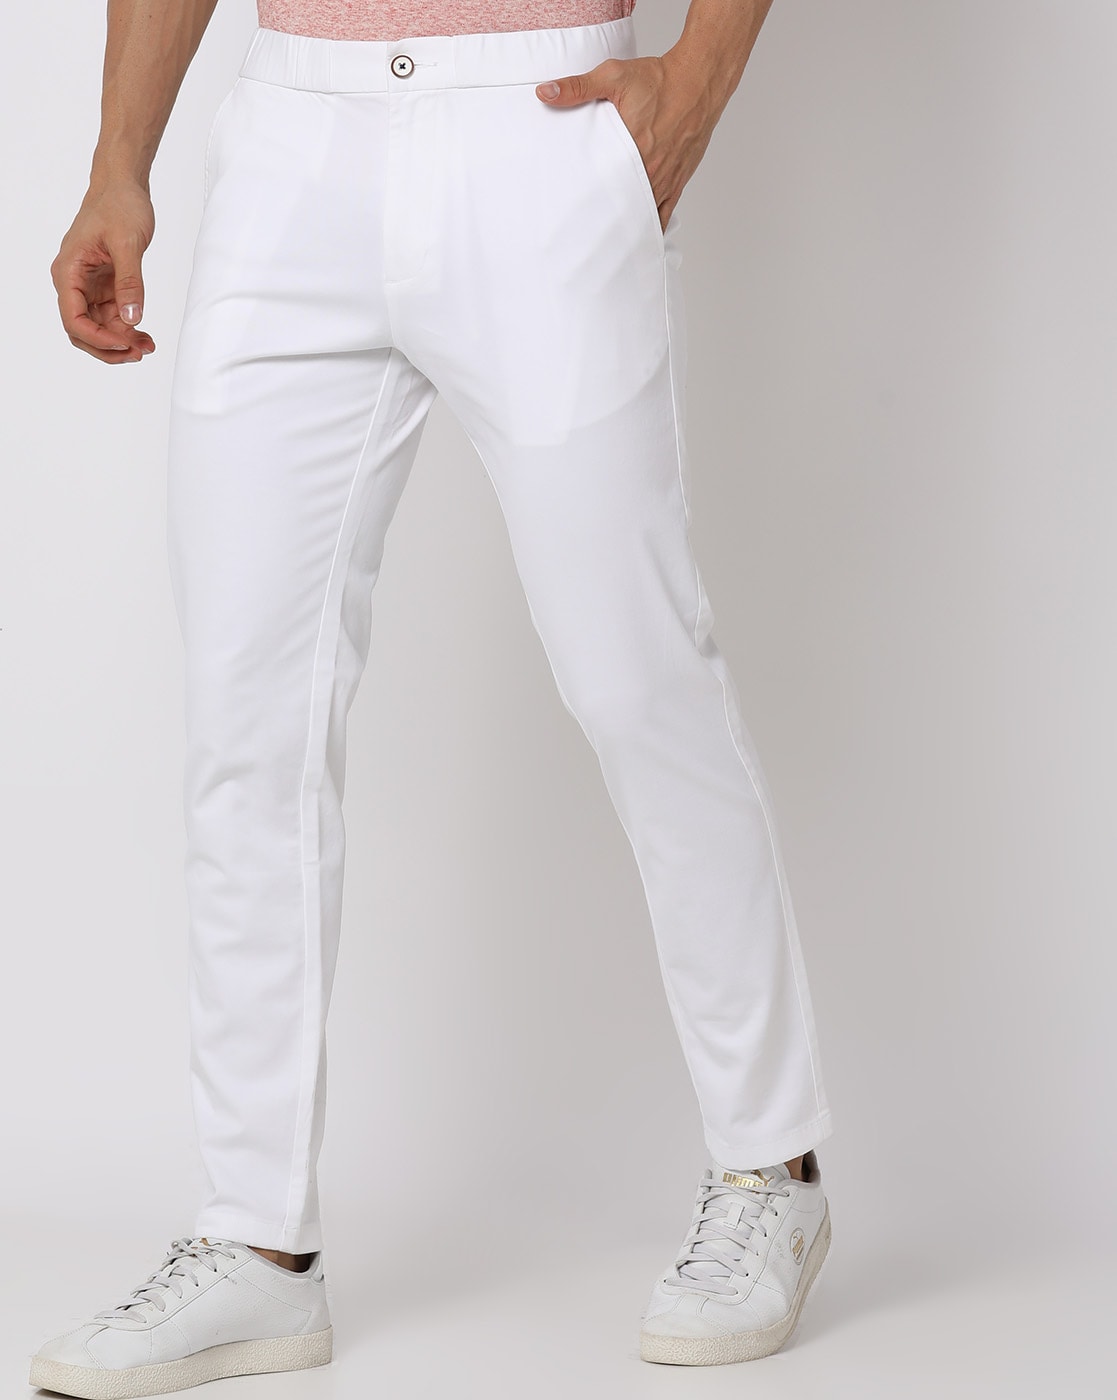 White cotton trousers 